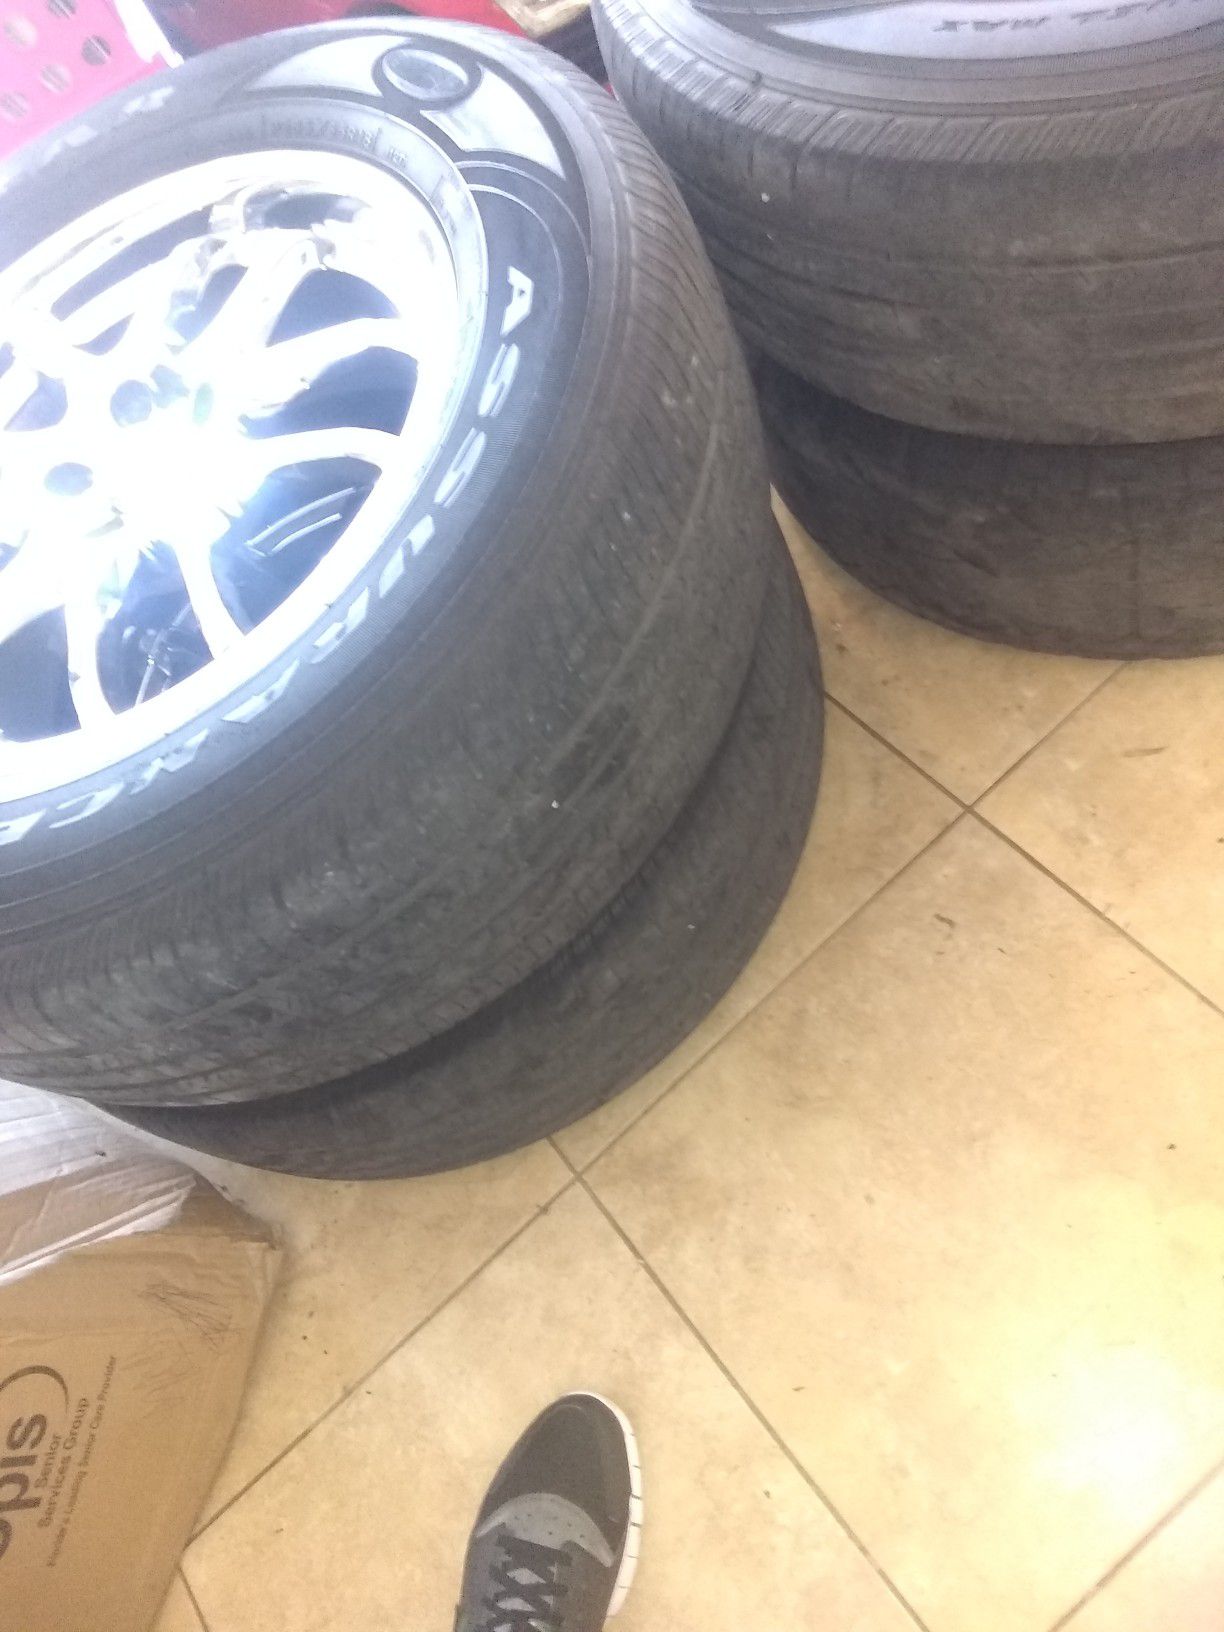 Infiniti chrome tires and rims..No chrome peeling.